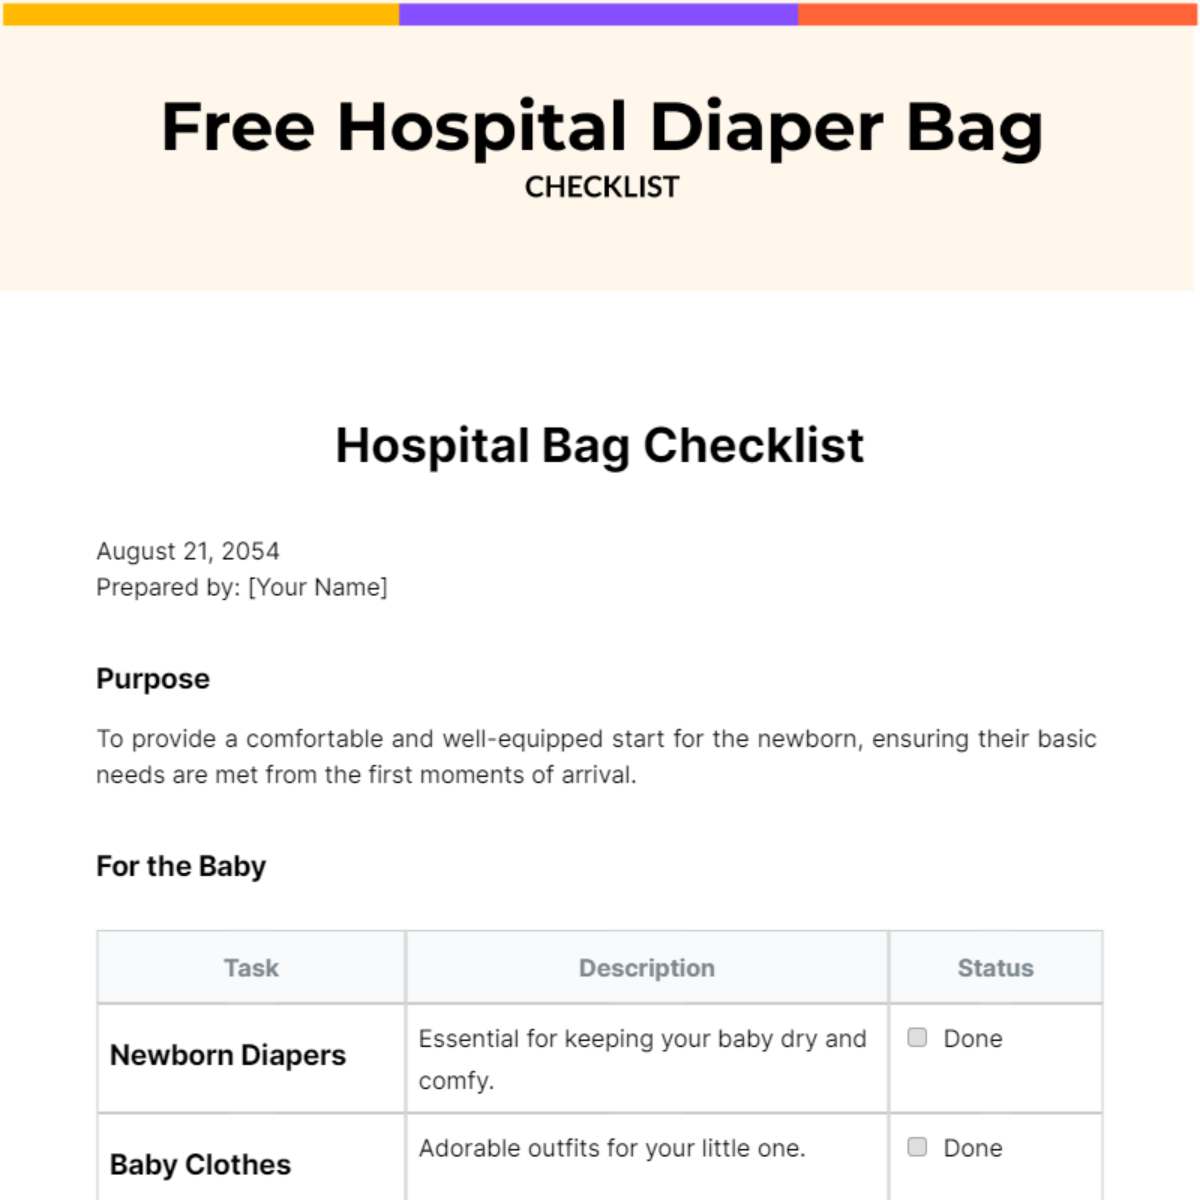 Free Hospital Diaper Bag Checklist Template